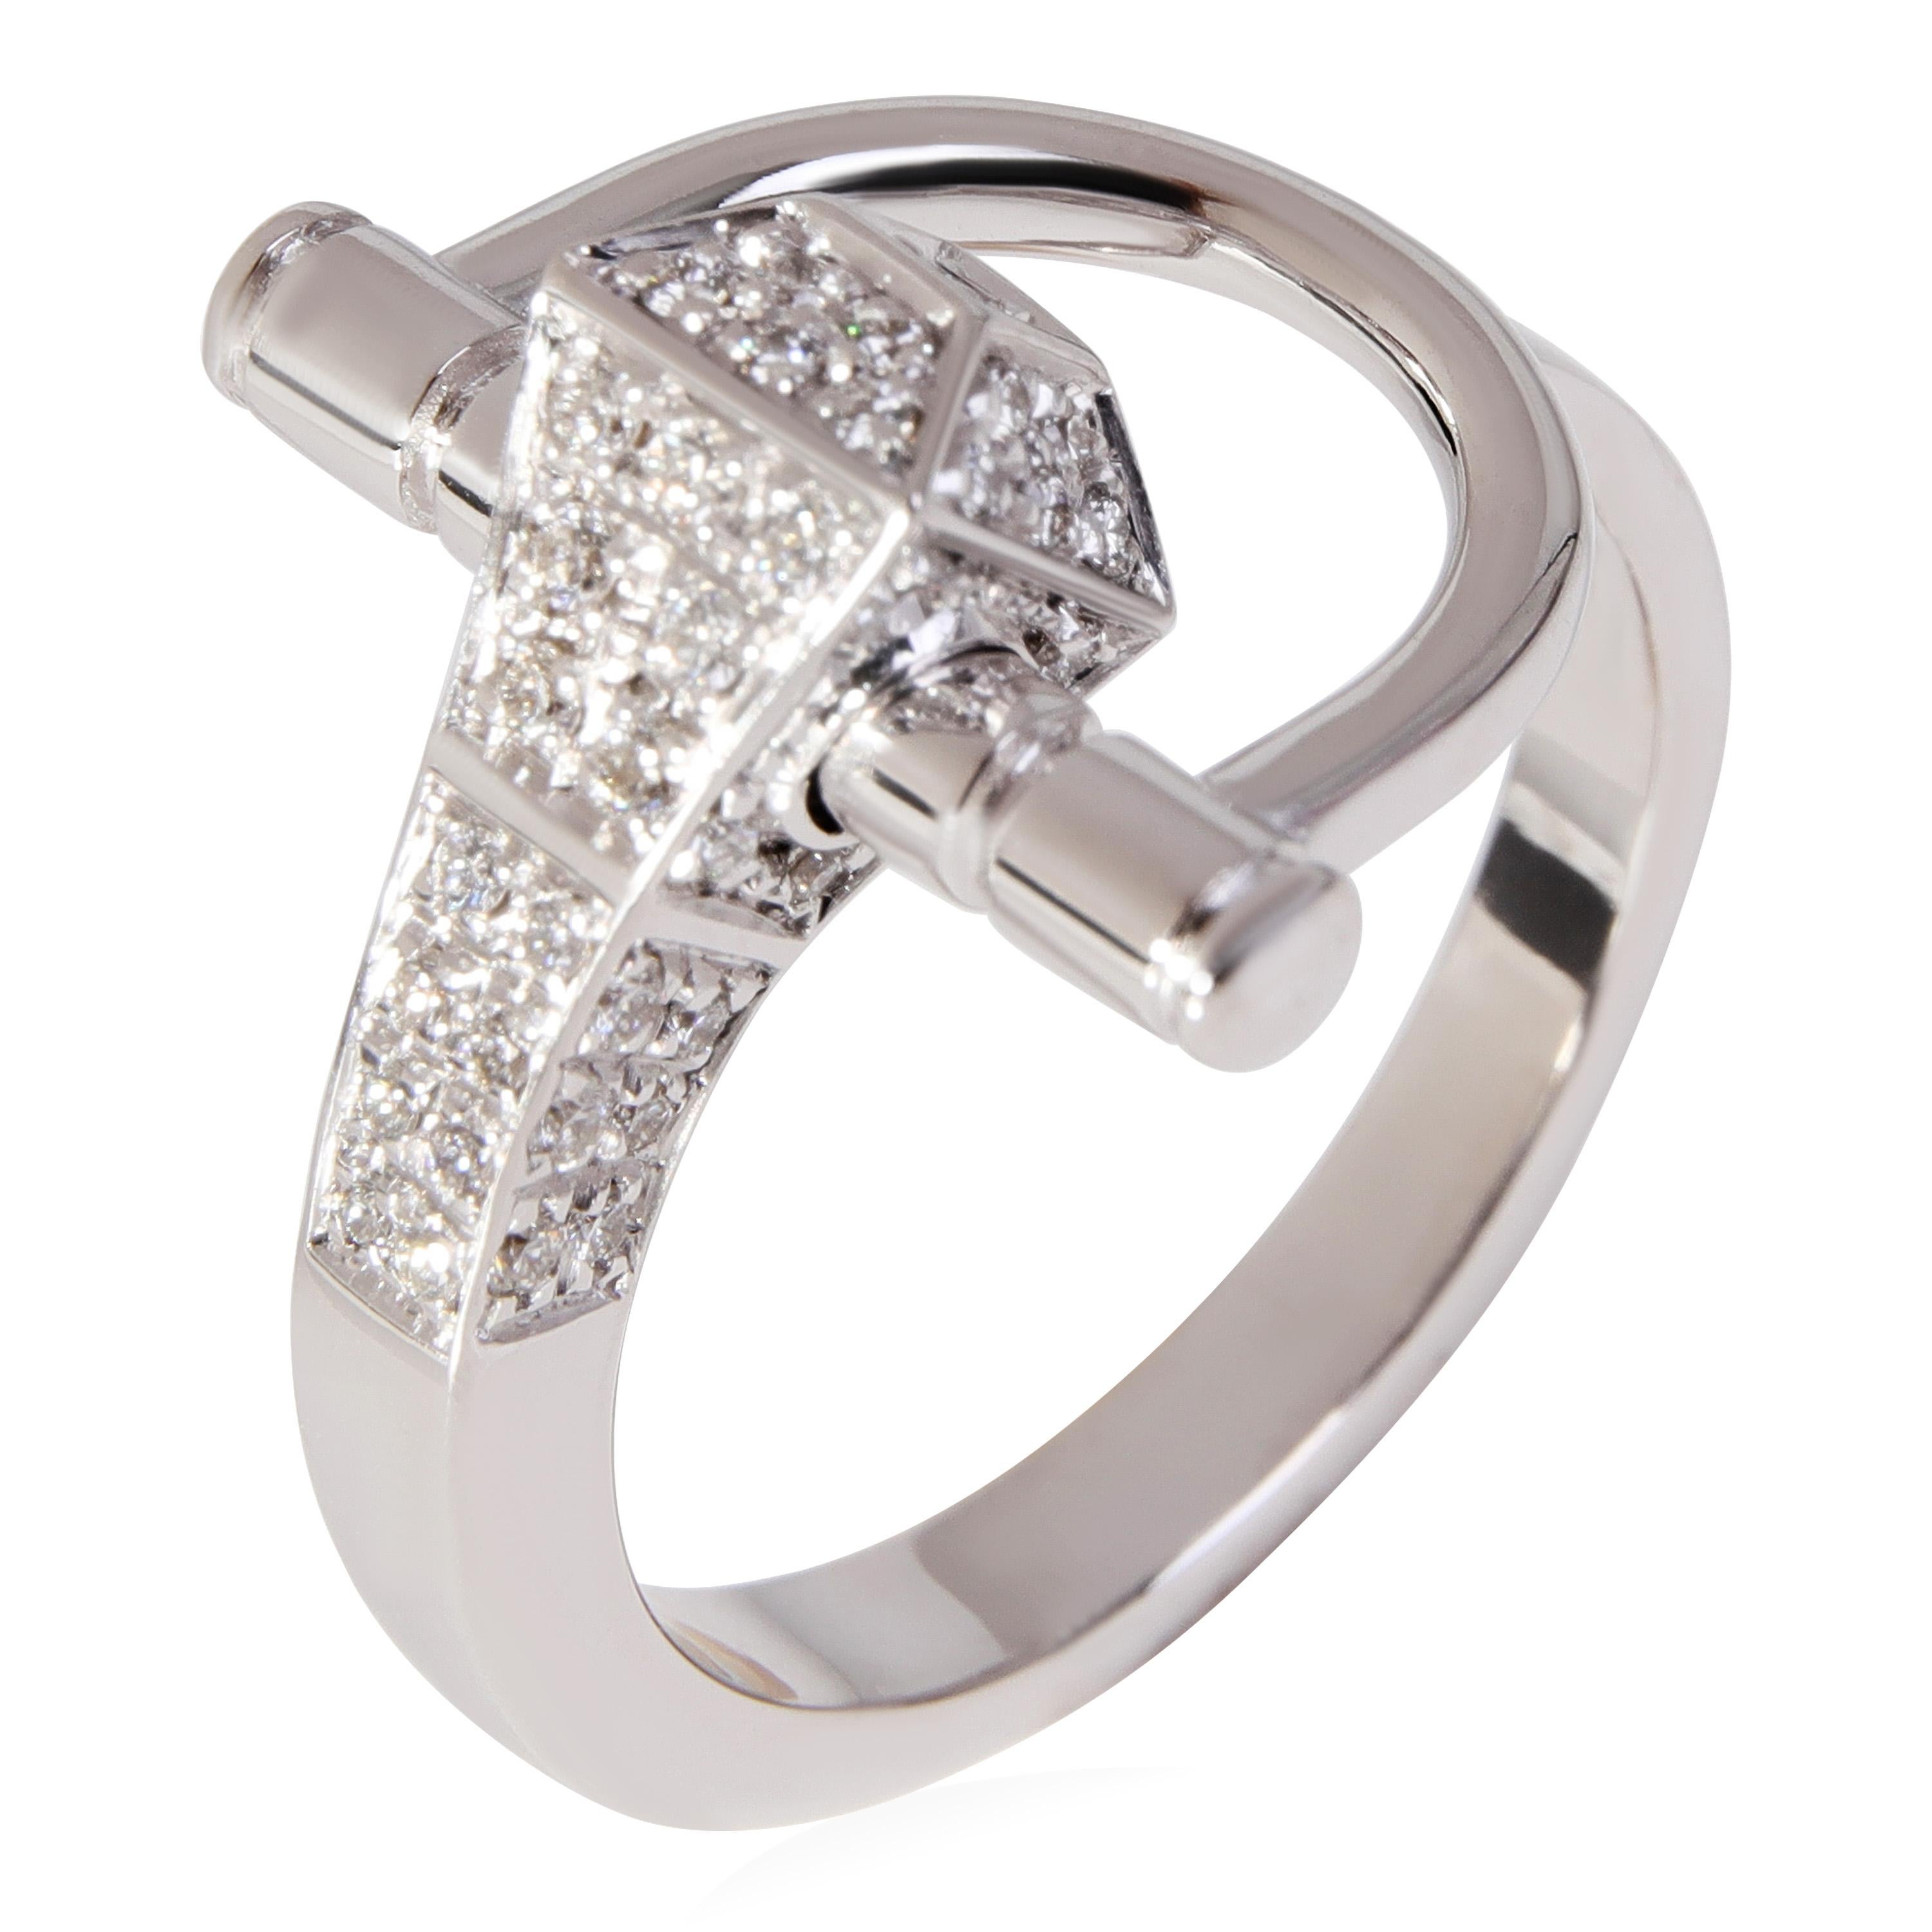 Women's Gucci Chiodo Horsebit Diamond Ring in 18k White Gold 0.40 Ctw For Sale